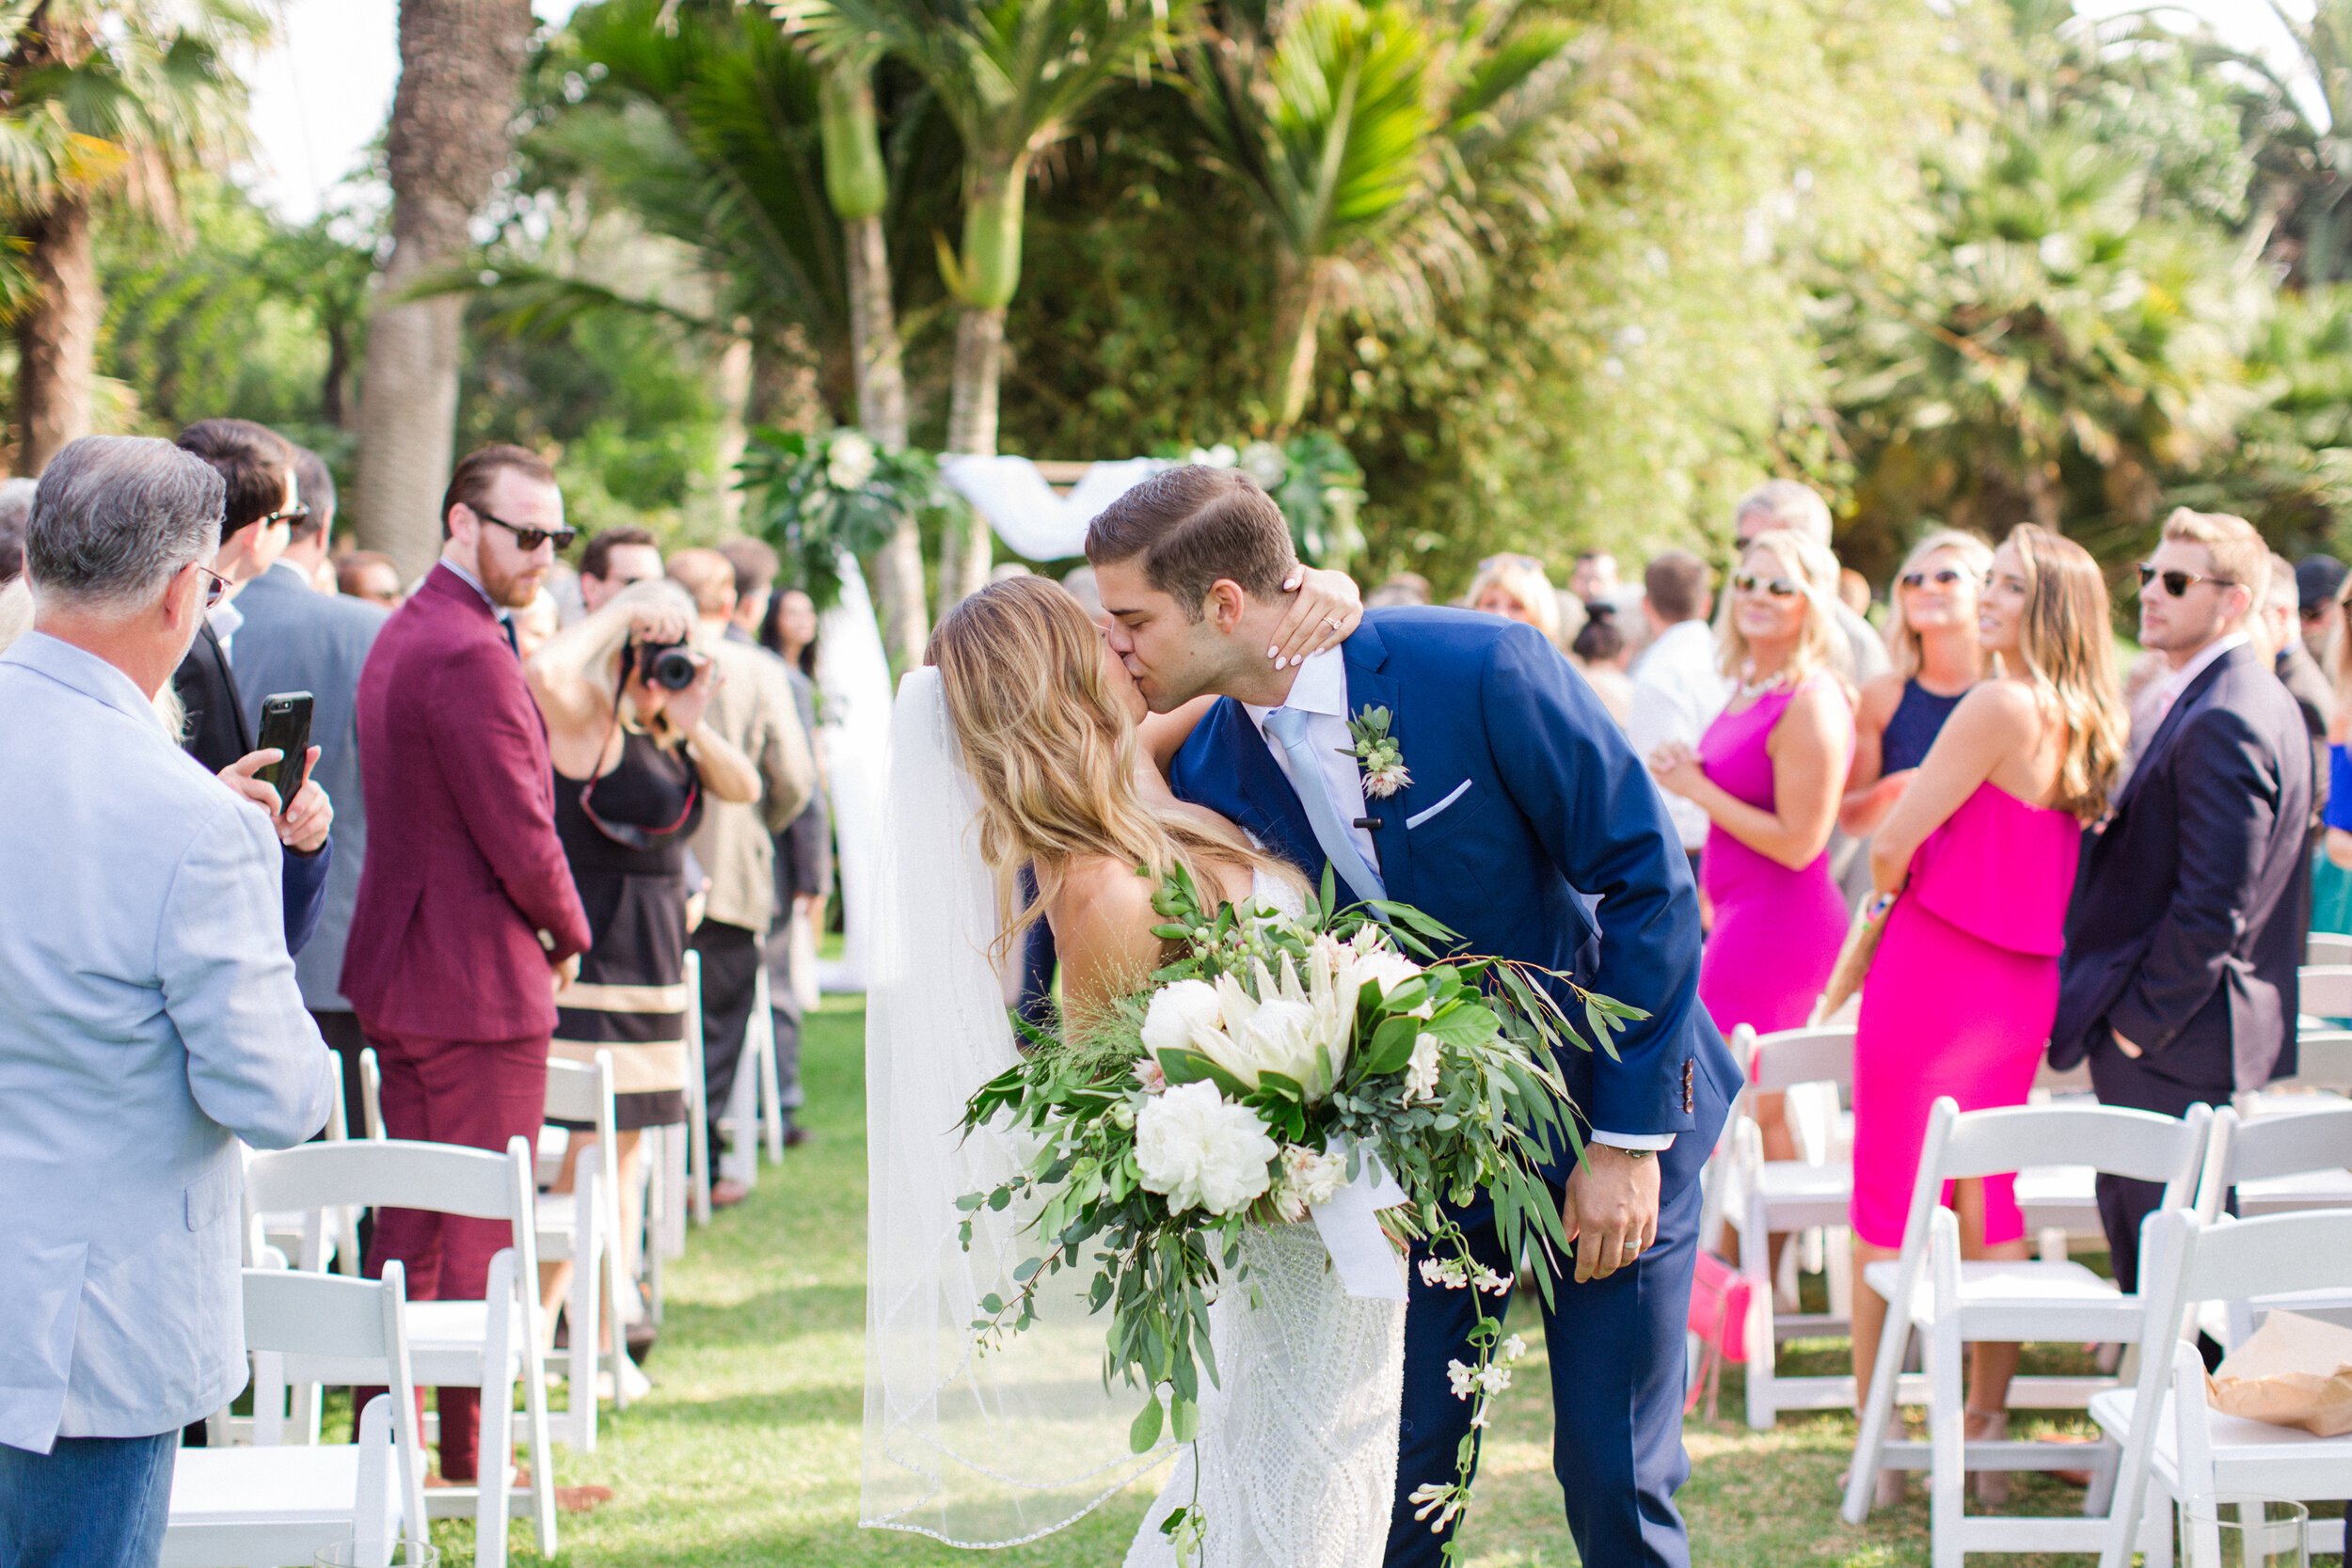 www.santabarbarawedding.com | The Vondys | Santa Barbara Zoo | Olivetta Flowers | Todd Broadland | Amanda Buckingham | Taryn Reed | Bride and Groom’s First Kiss at the Ceremony